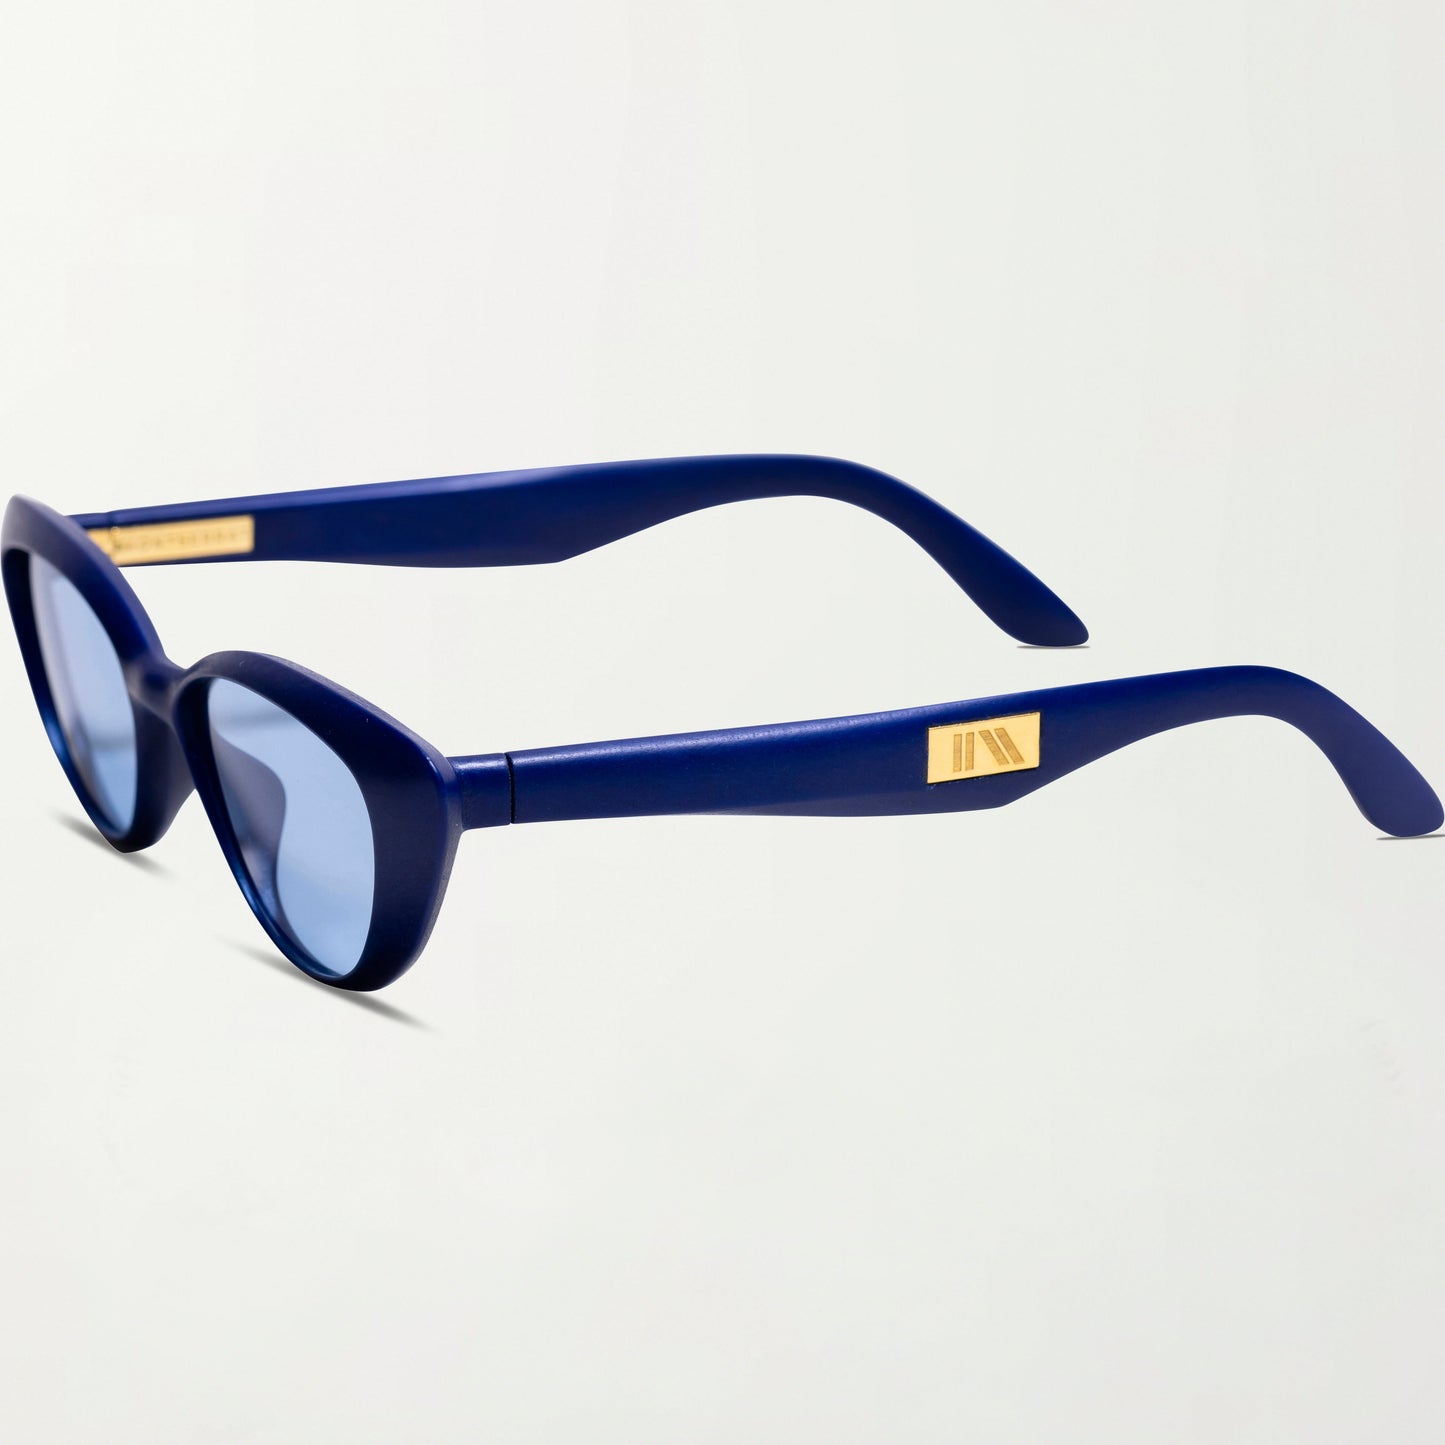 The Capri Sunglasses in Mediterranean Blue